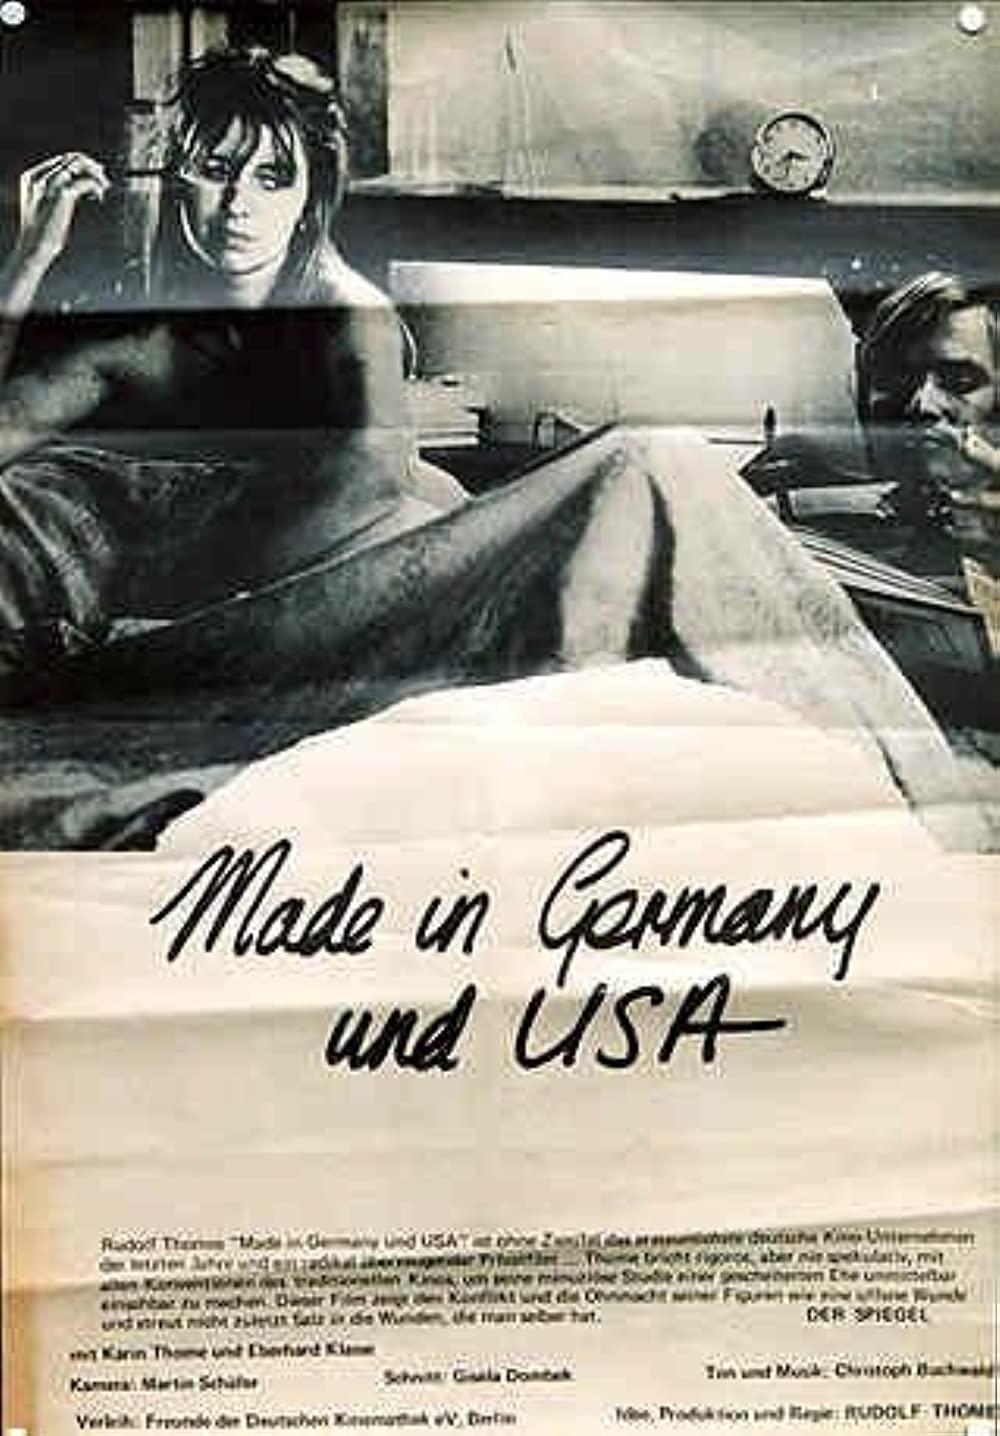 Filmbeschreibung zu Made in Germany and USA